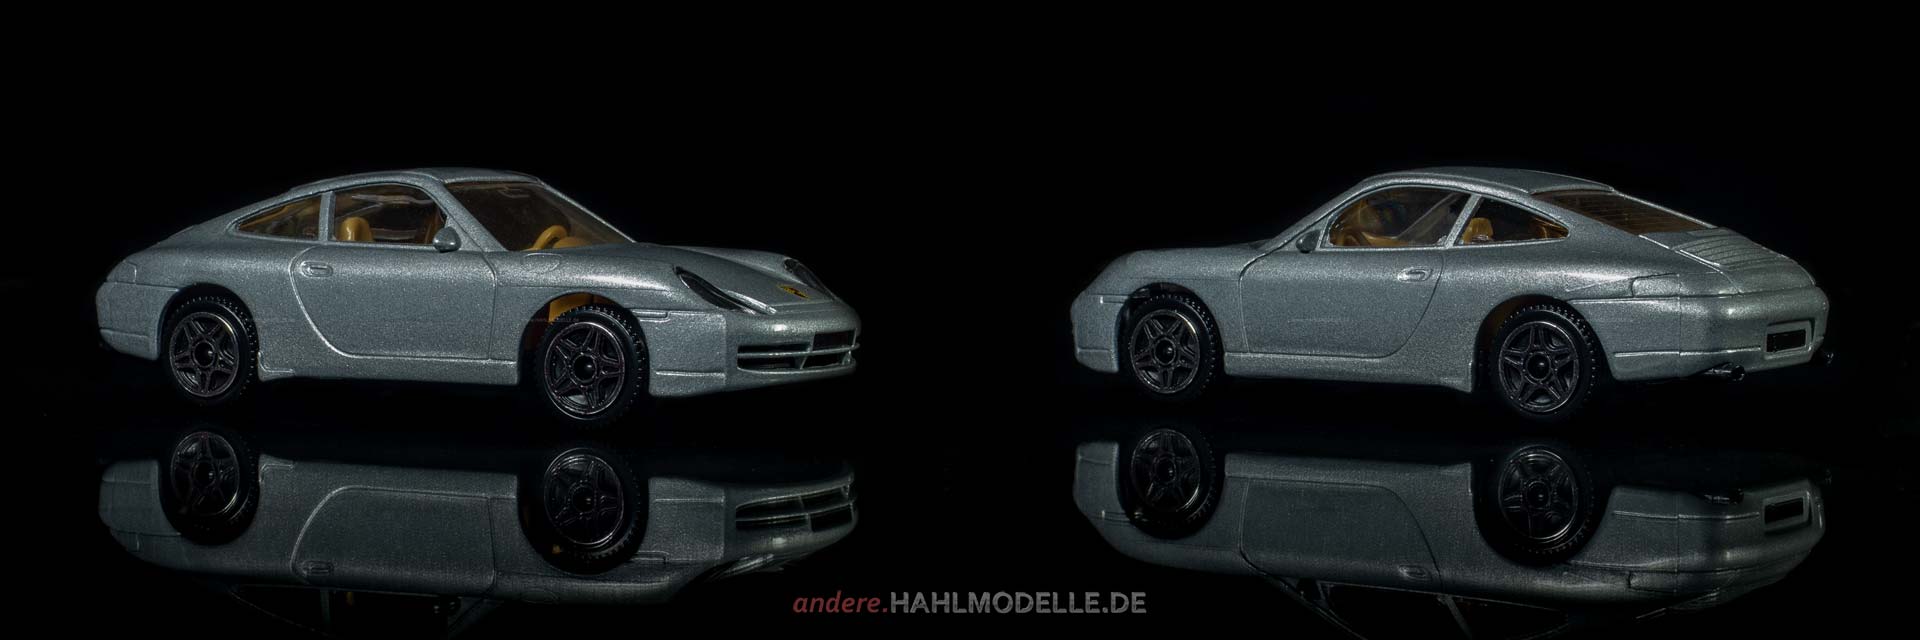 Porsche 911 Carrera (Typ 996) | Coupé | Bburago | www.andere.hahlmodelle.de